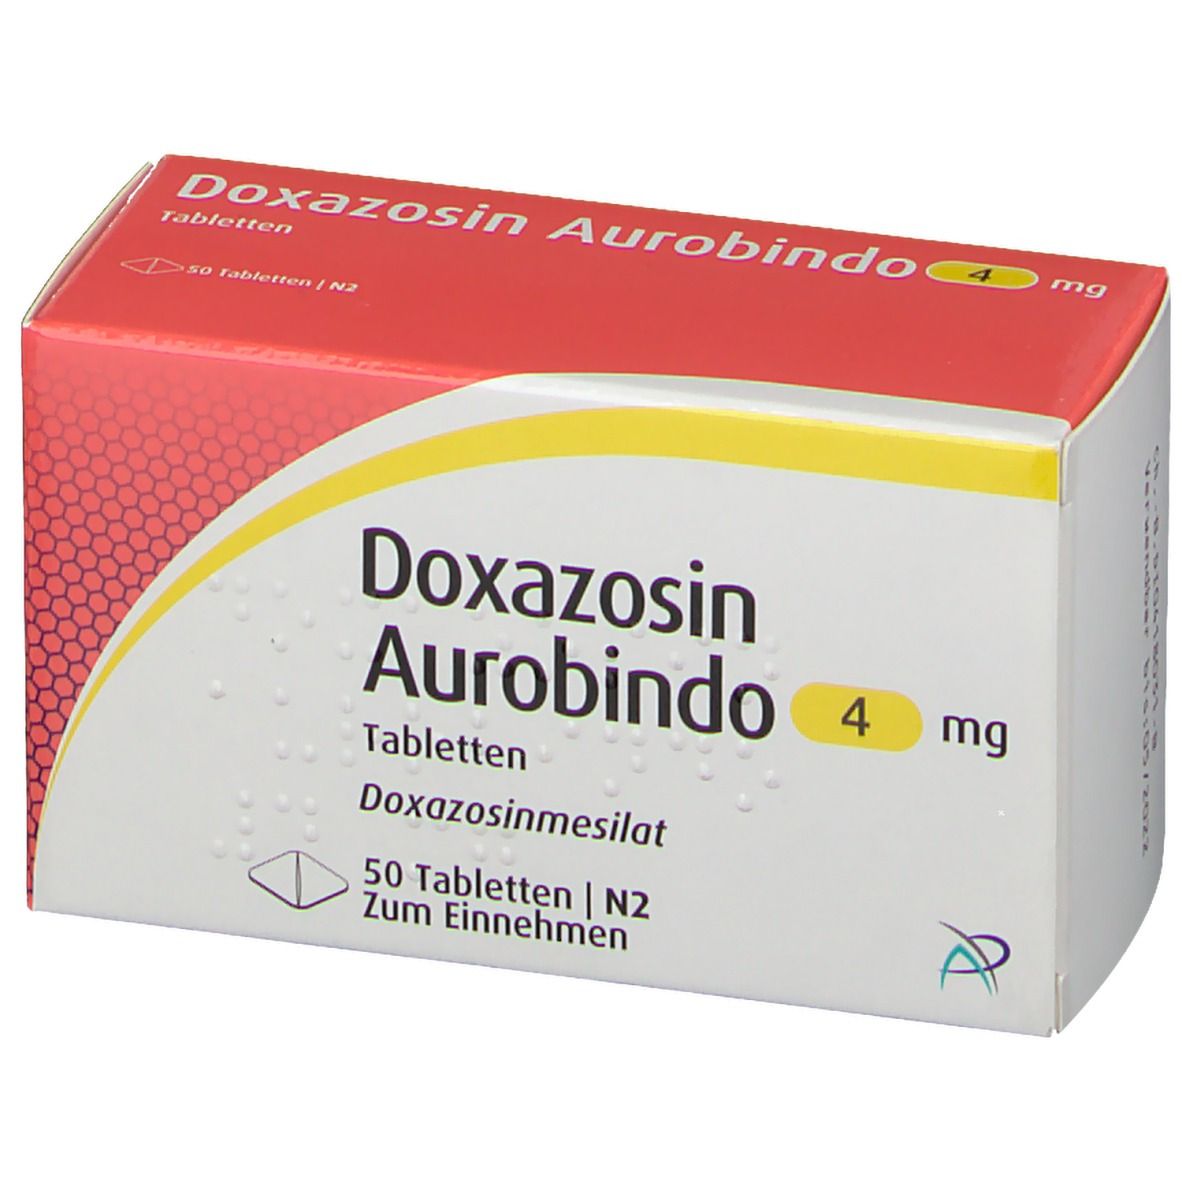 Doxazosin Aurobindo 4 mg